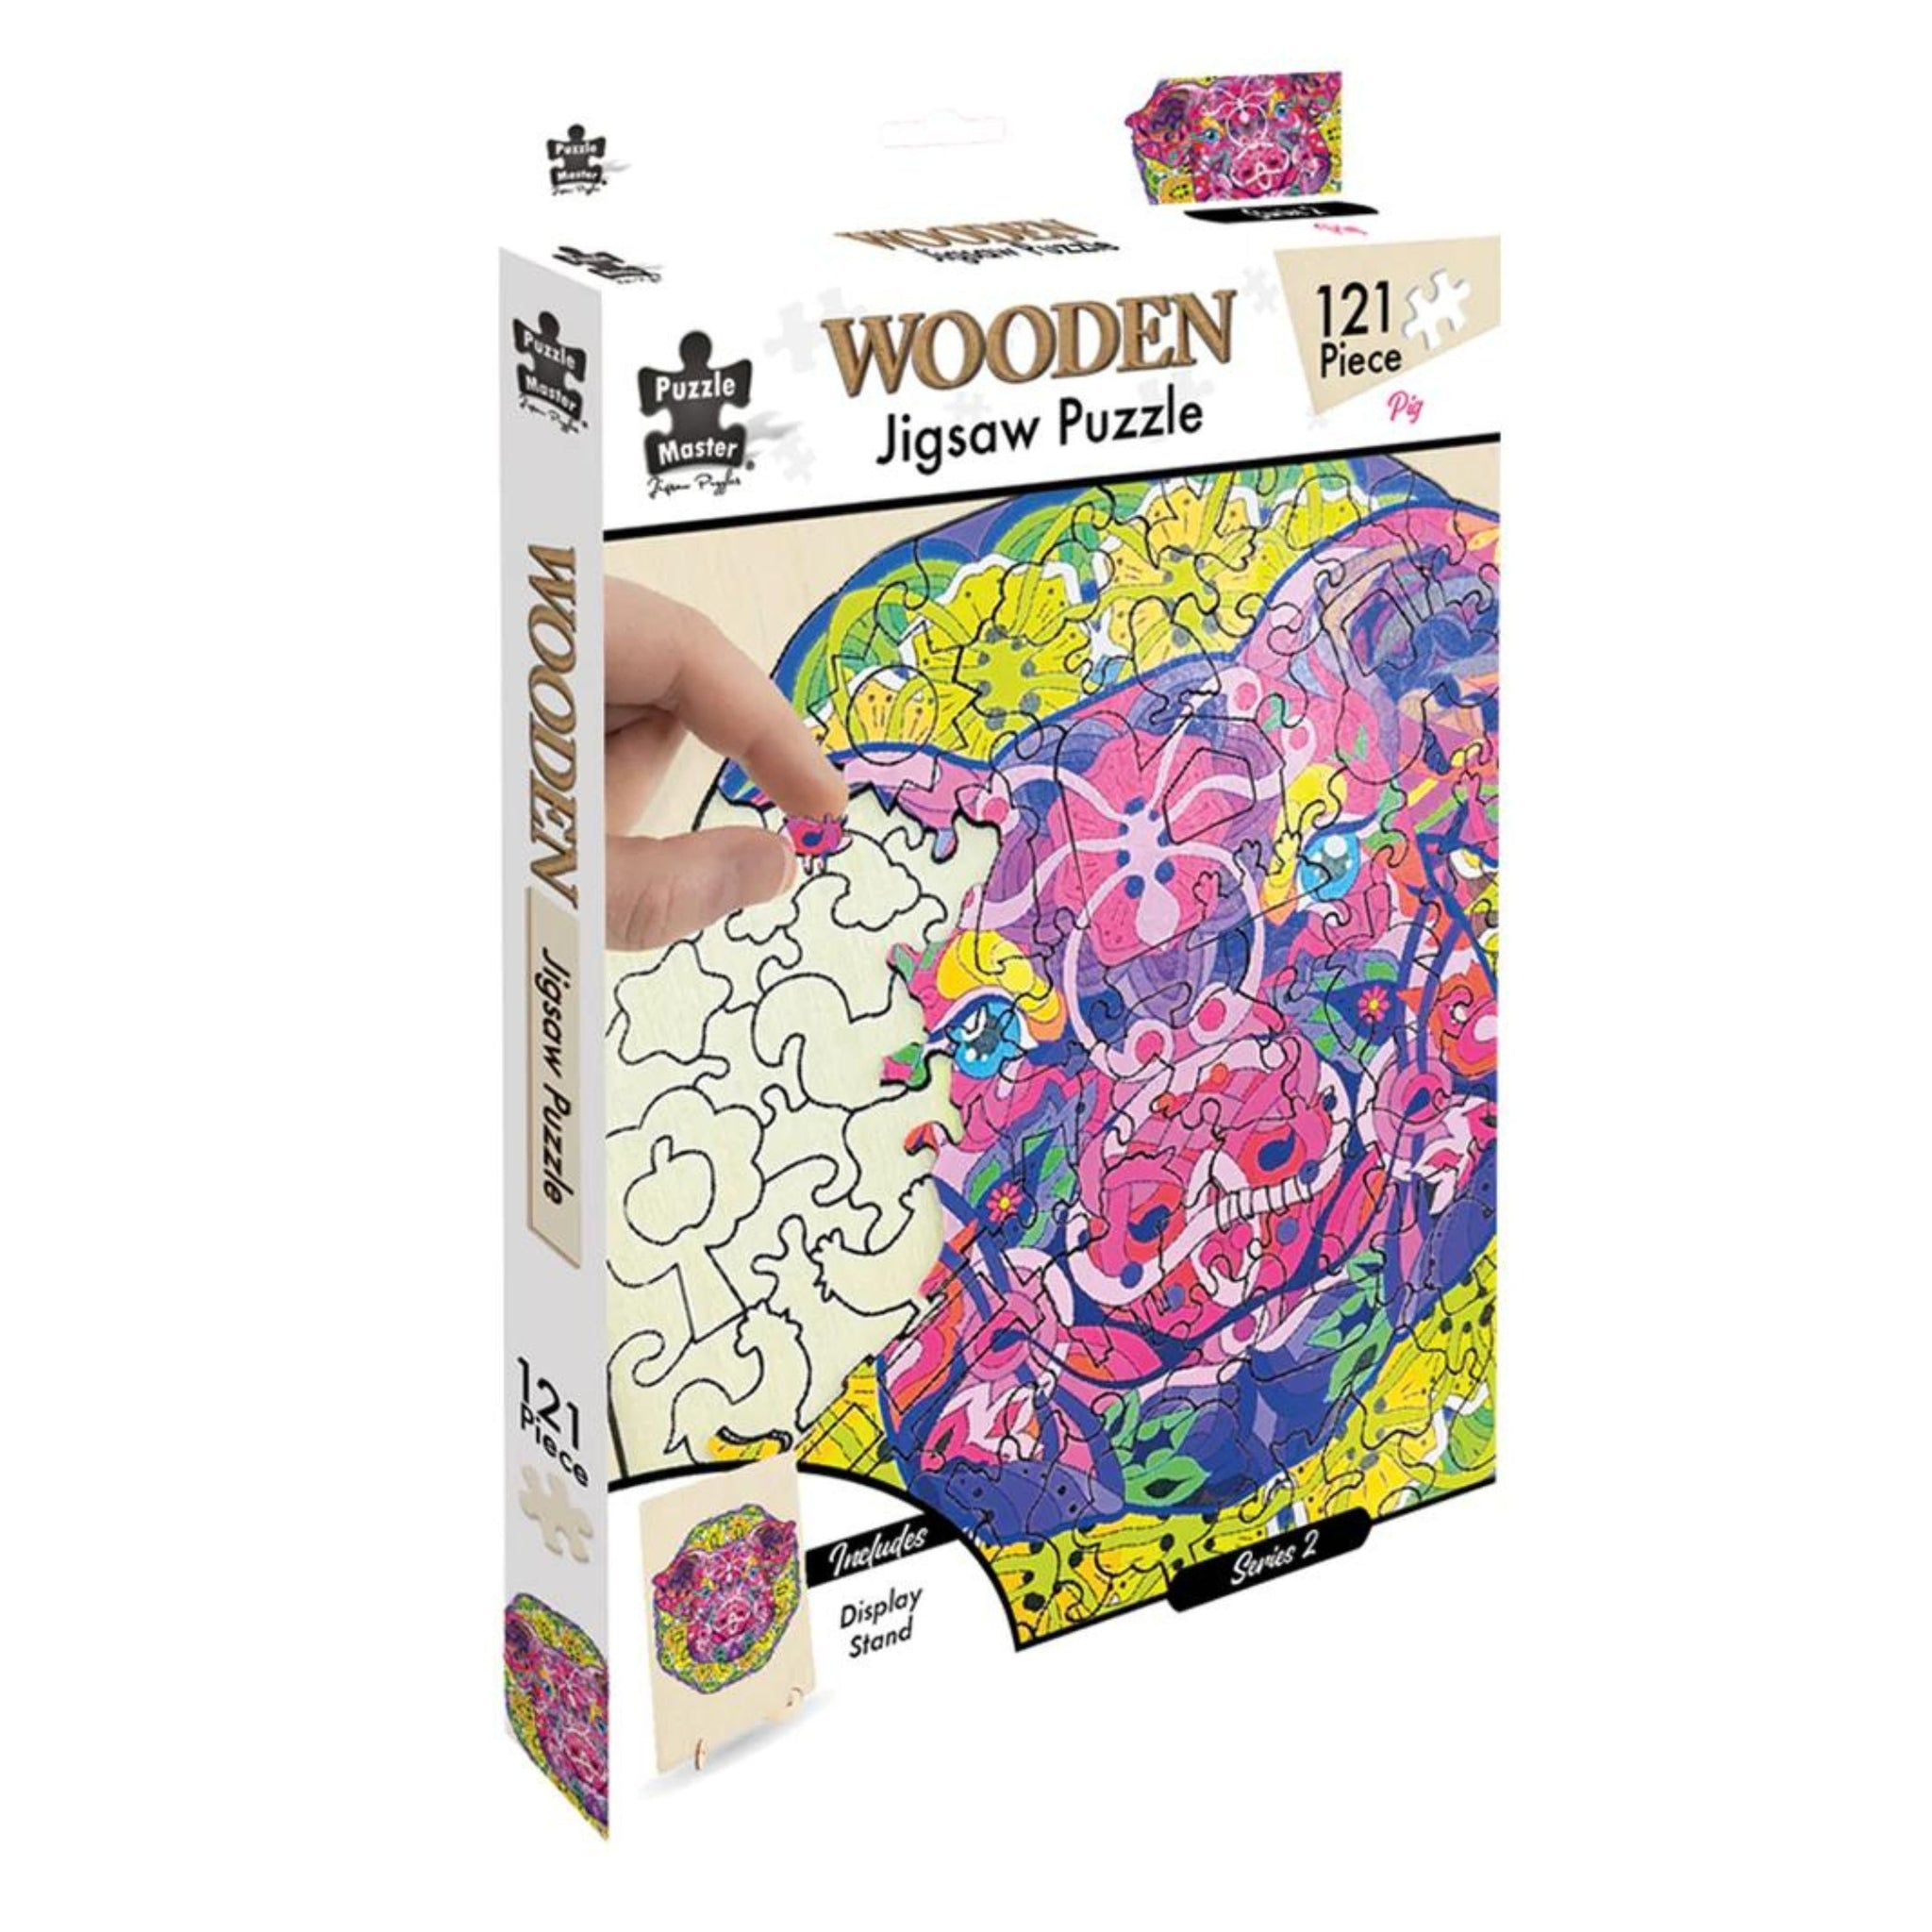 Wooden Jigsaw Puzzle 121 Piece, Pig